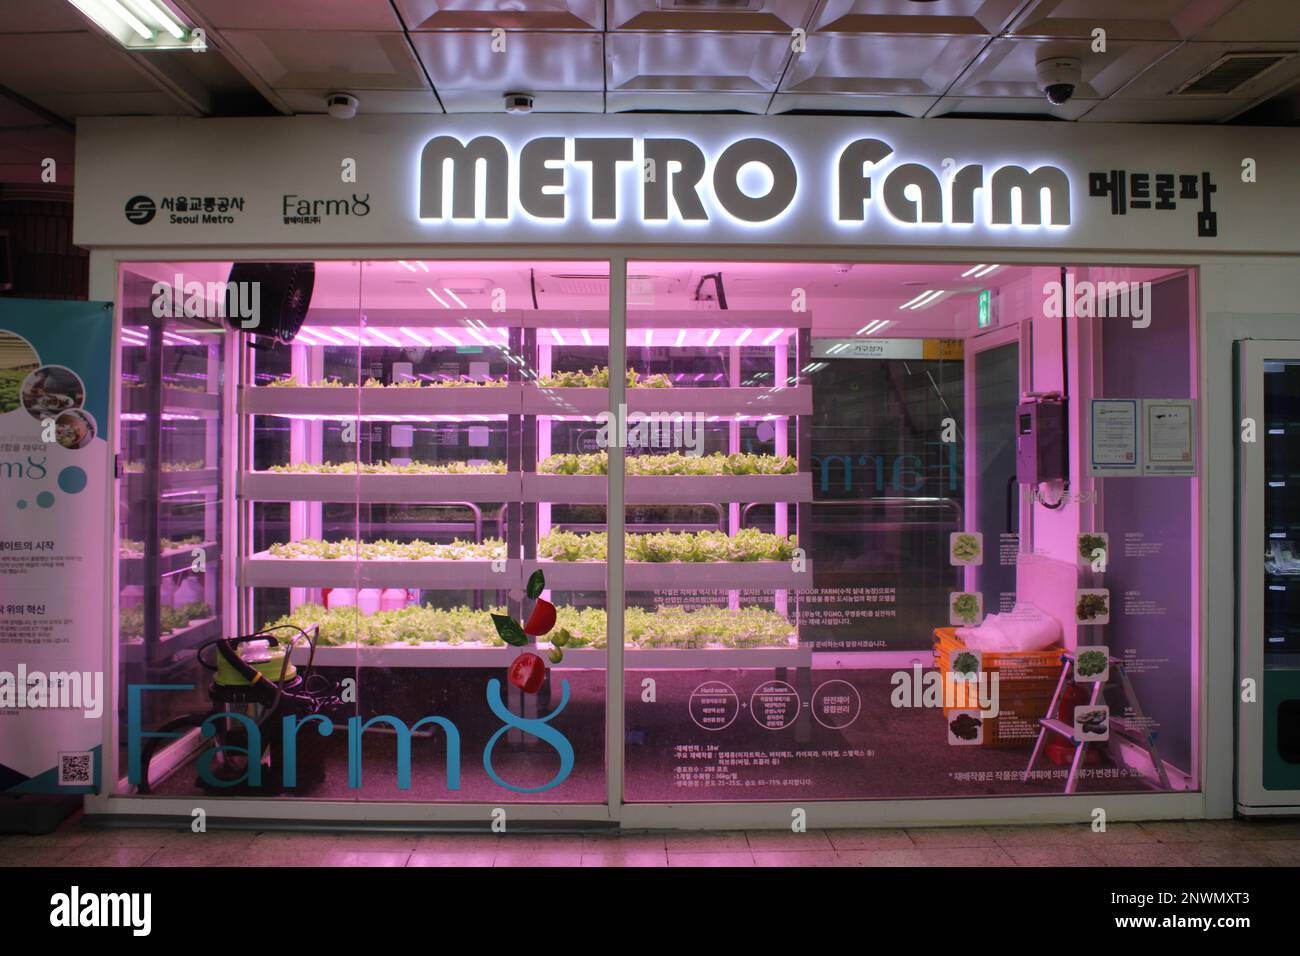 Metro Farm organic vegetable growing facility in underground subway station Stock Photo